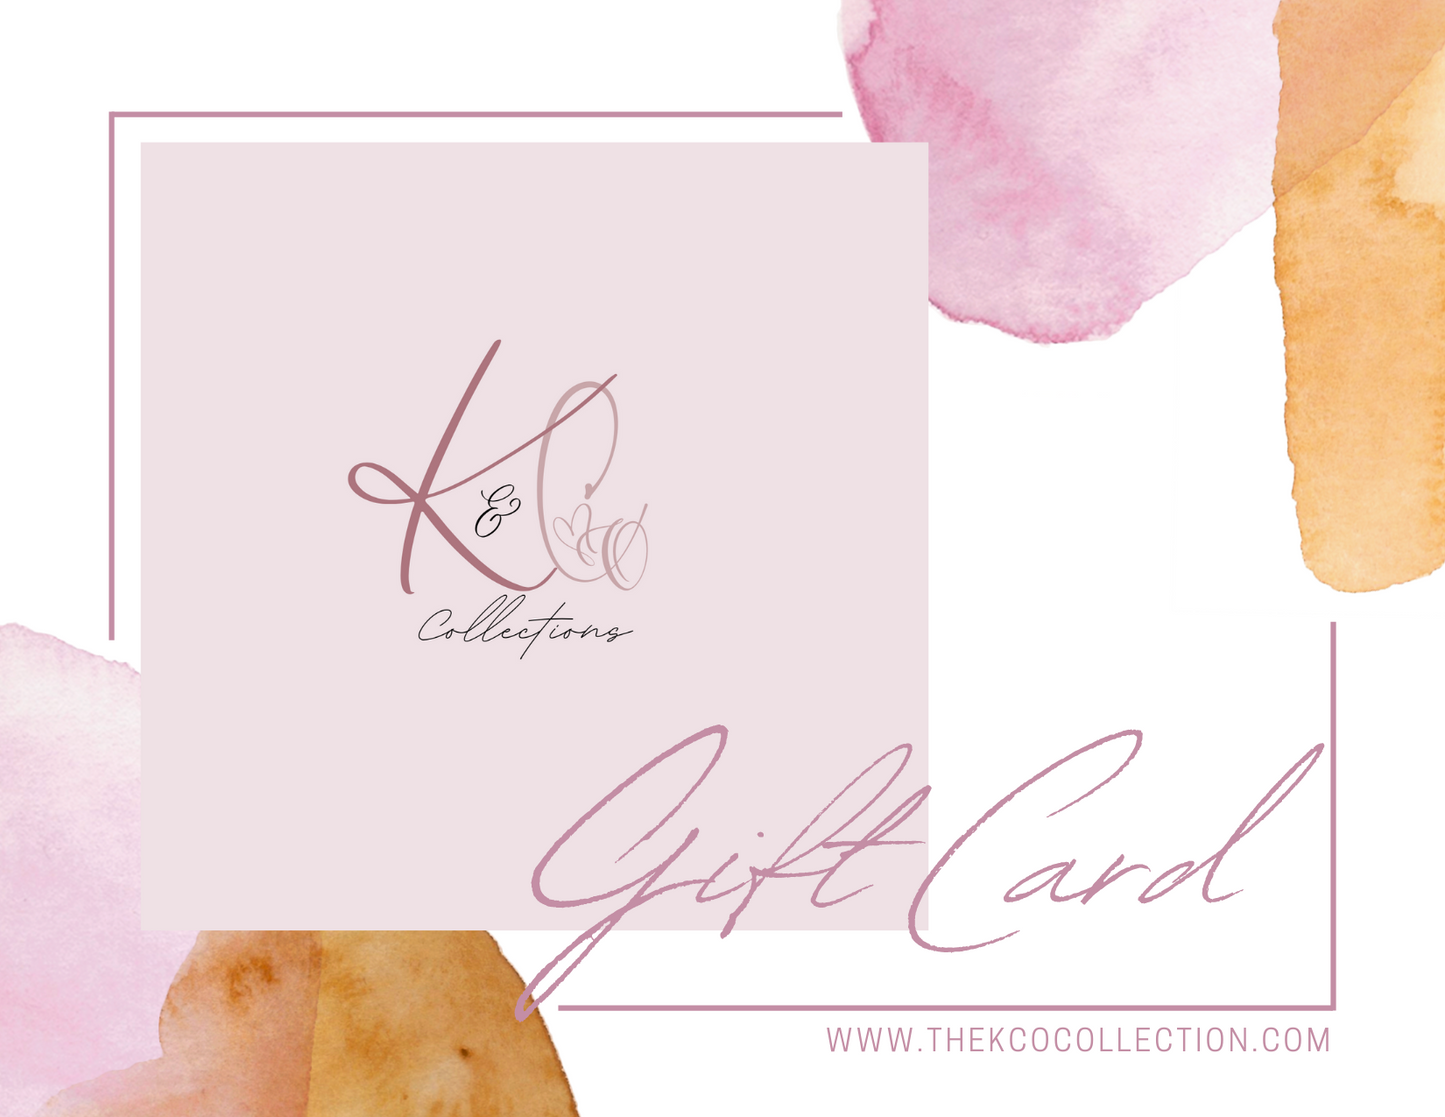 K & Co. Gift Card